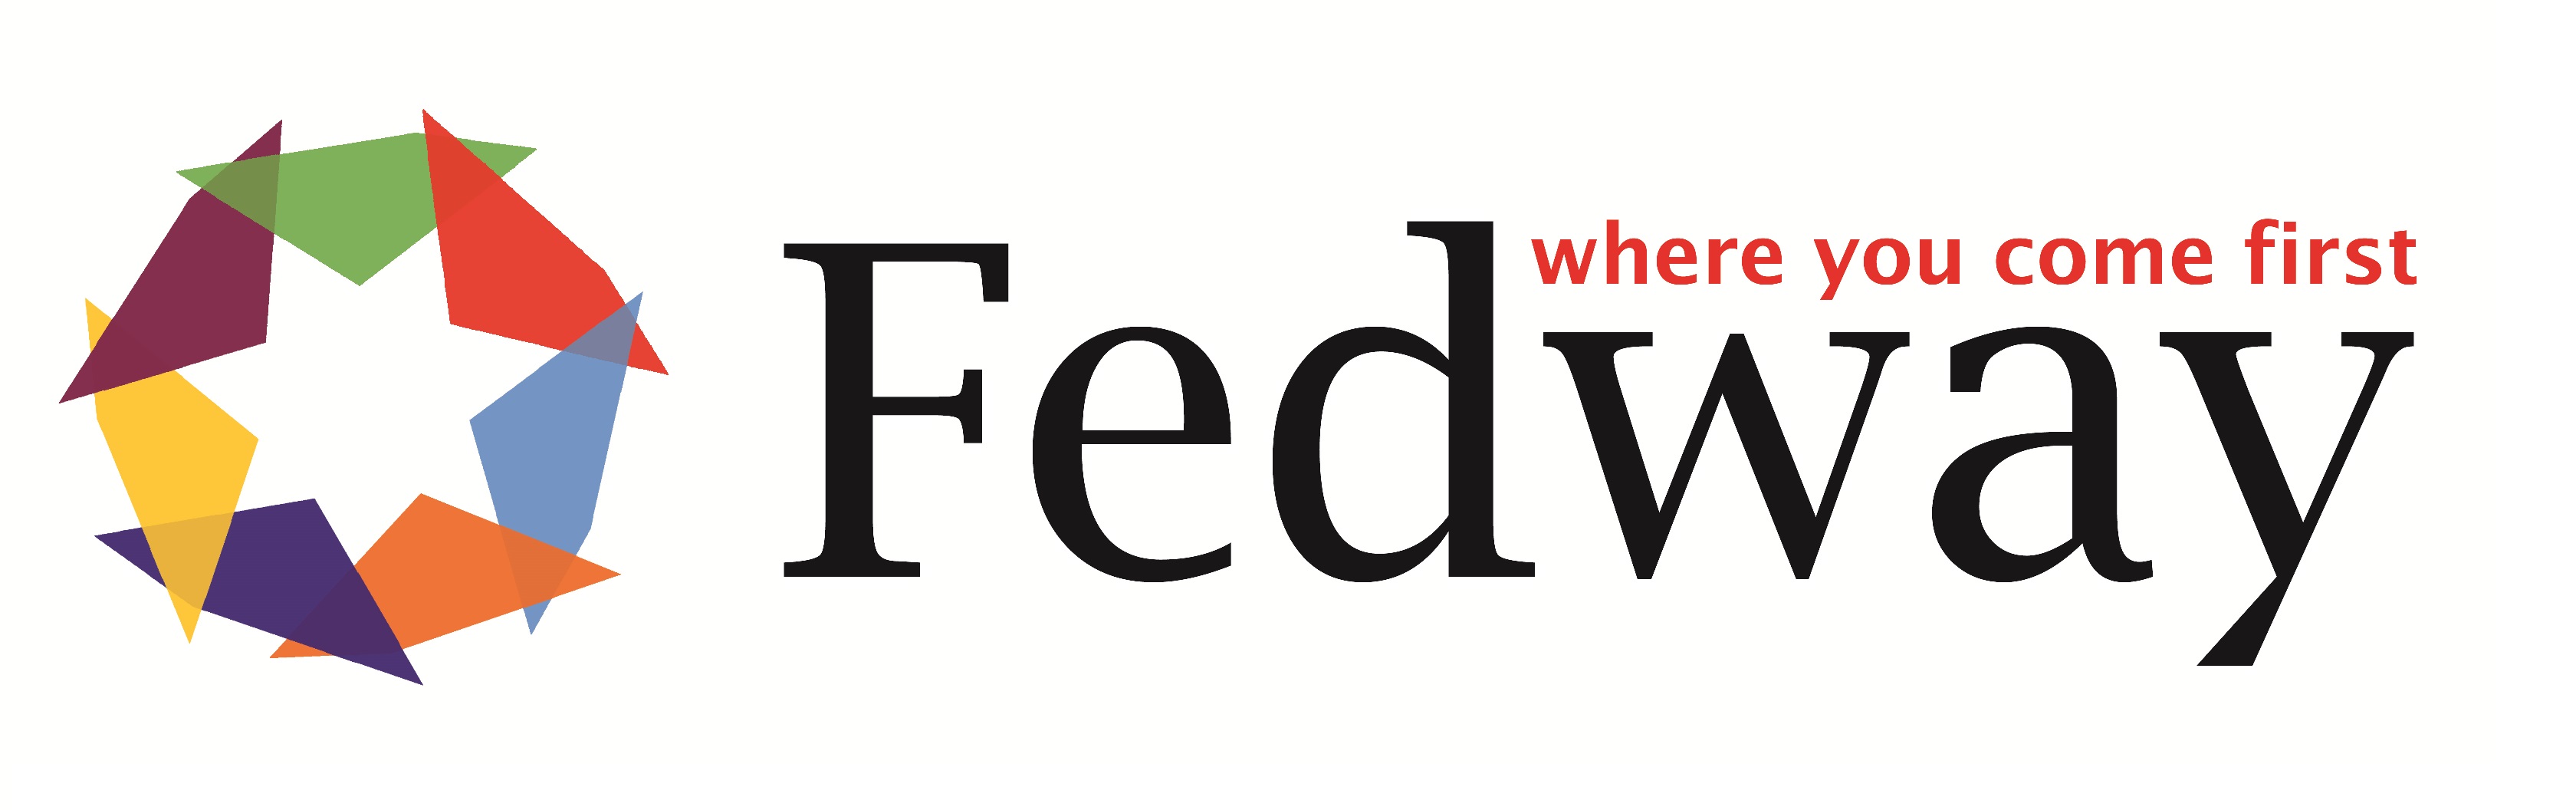 Fedway Logo new 2009